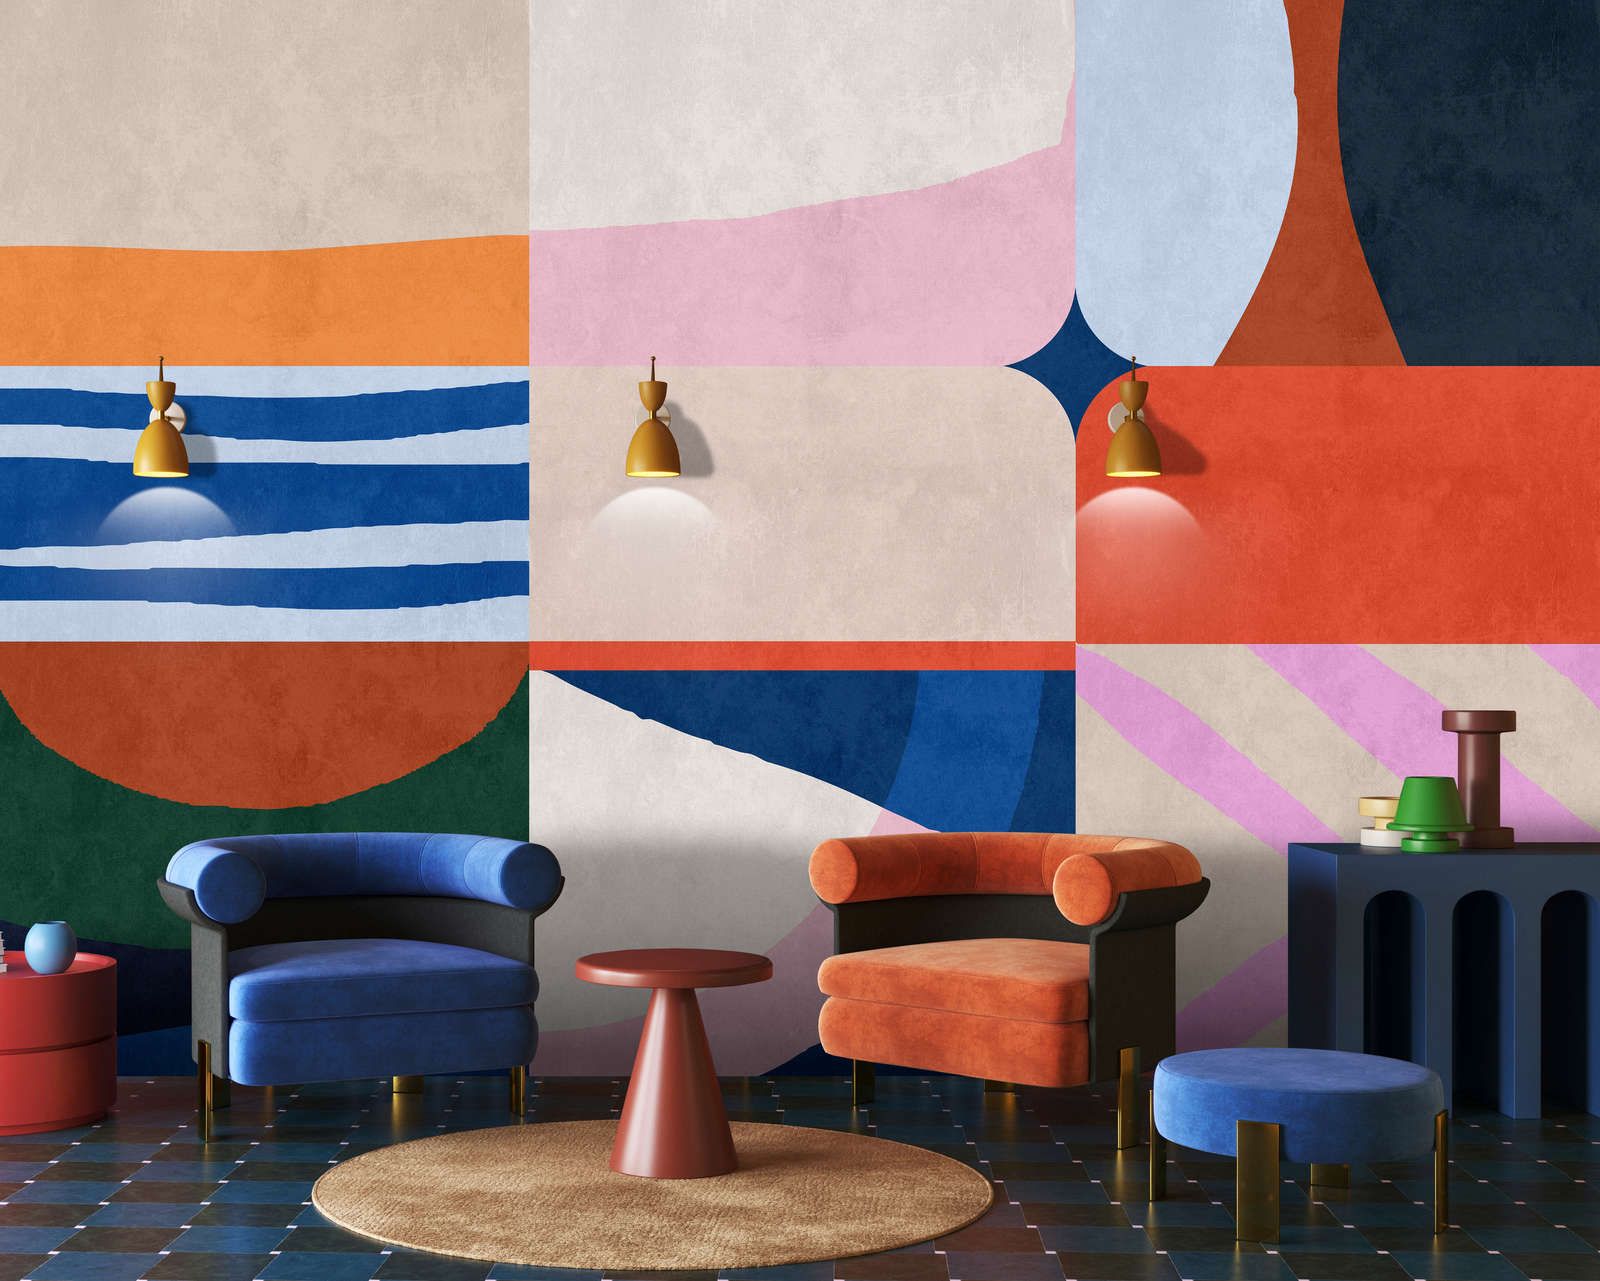             Photo wallpaper »mañana« - Colourful patchwork design with concrete plaster texture - Matt, smooth non-woven fabric
        